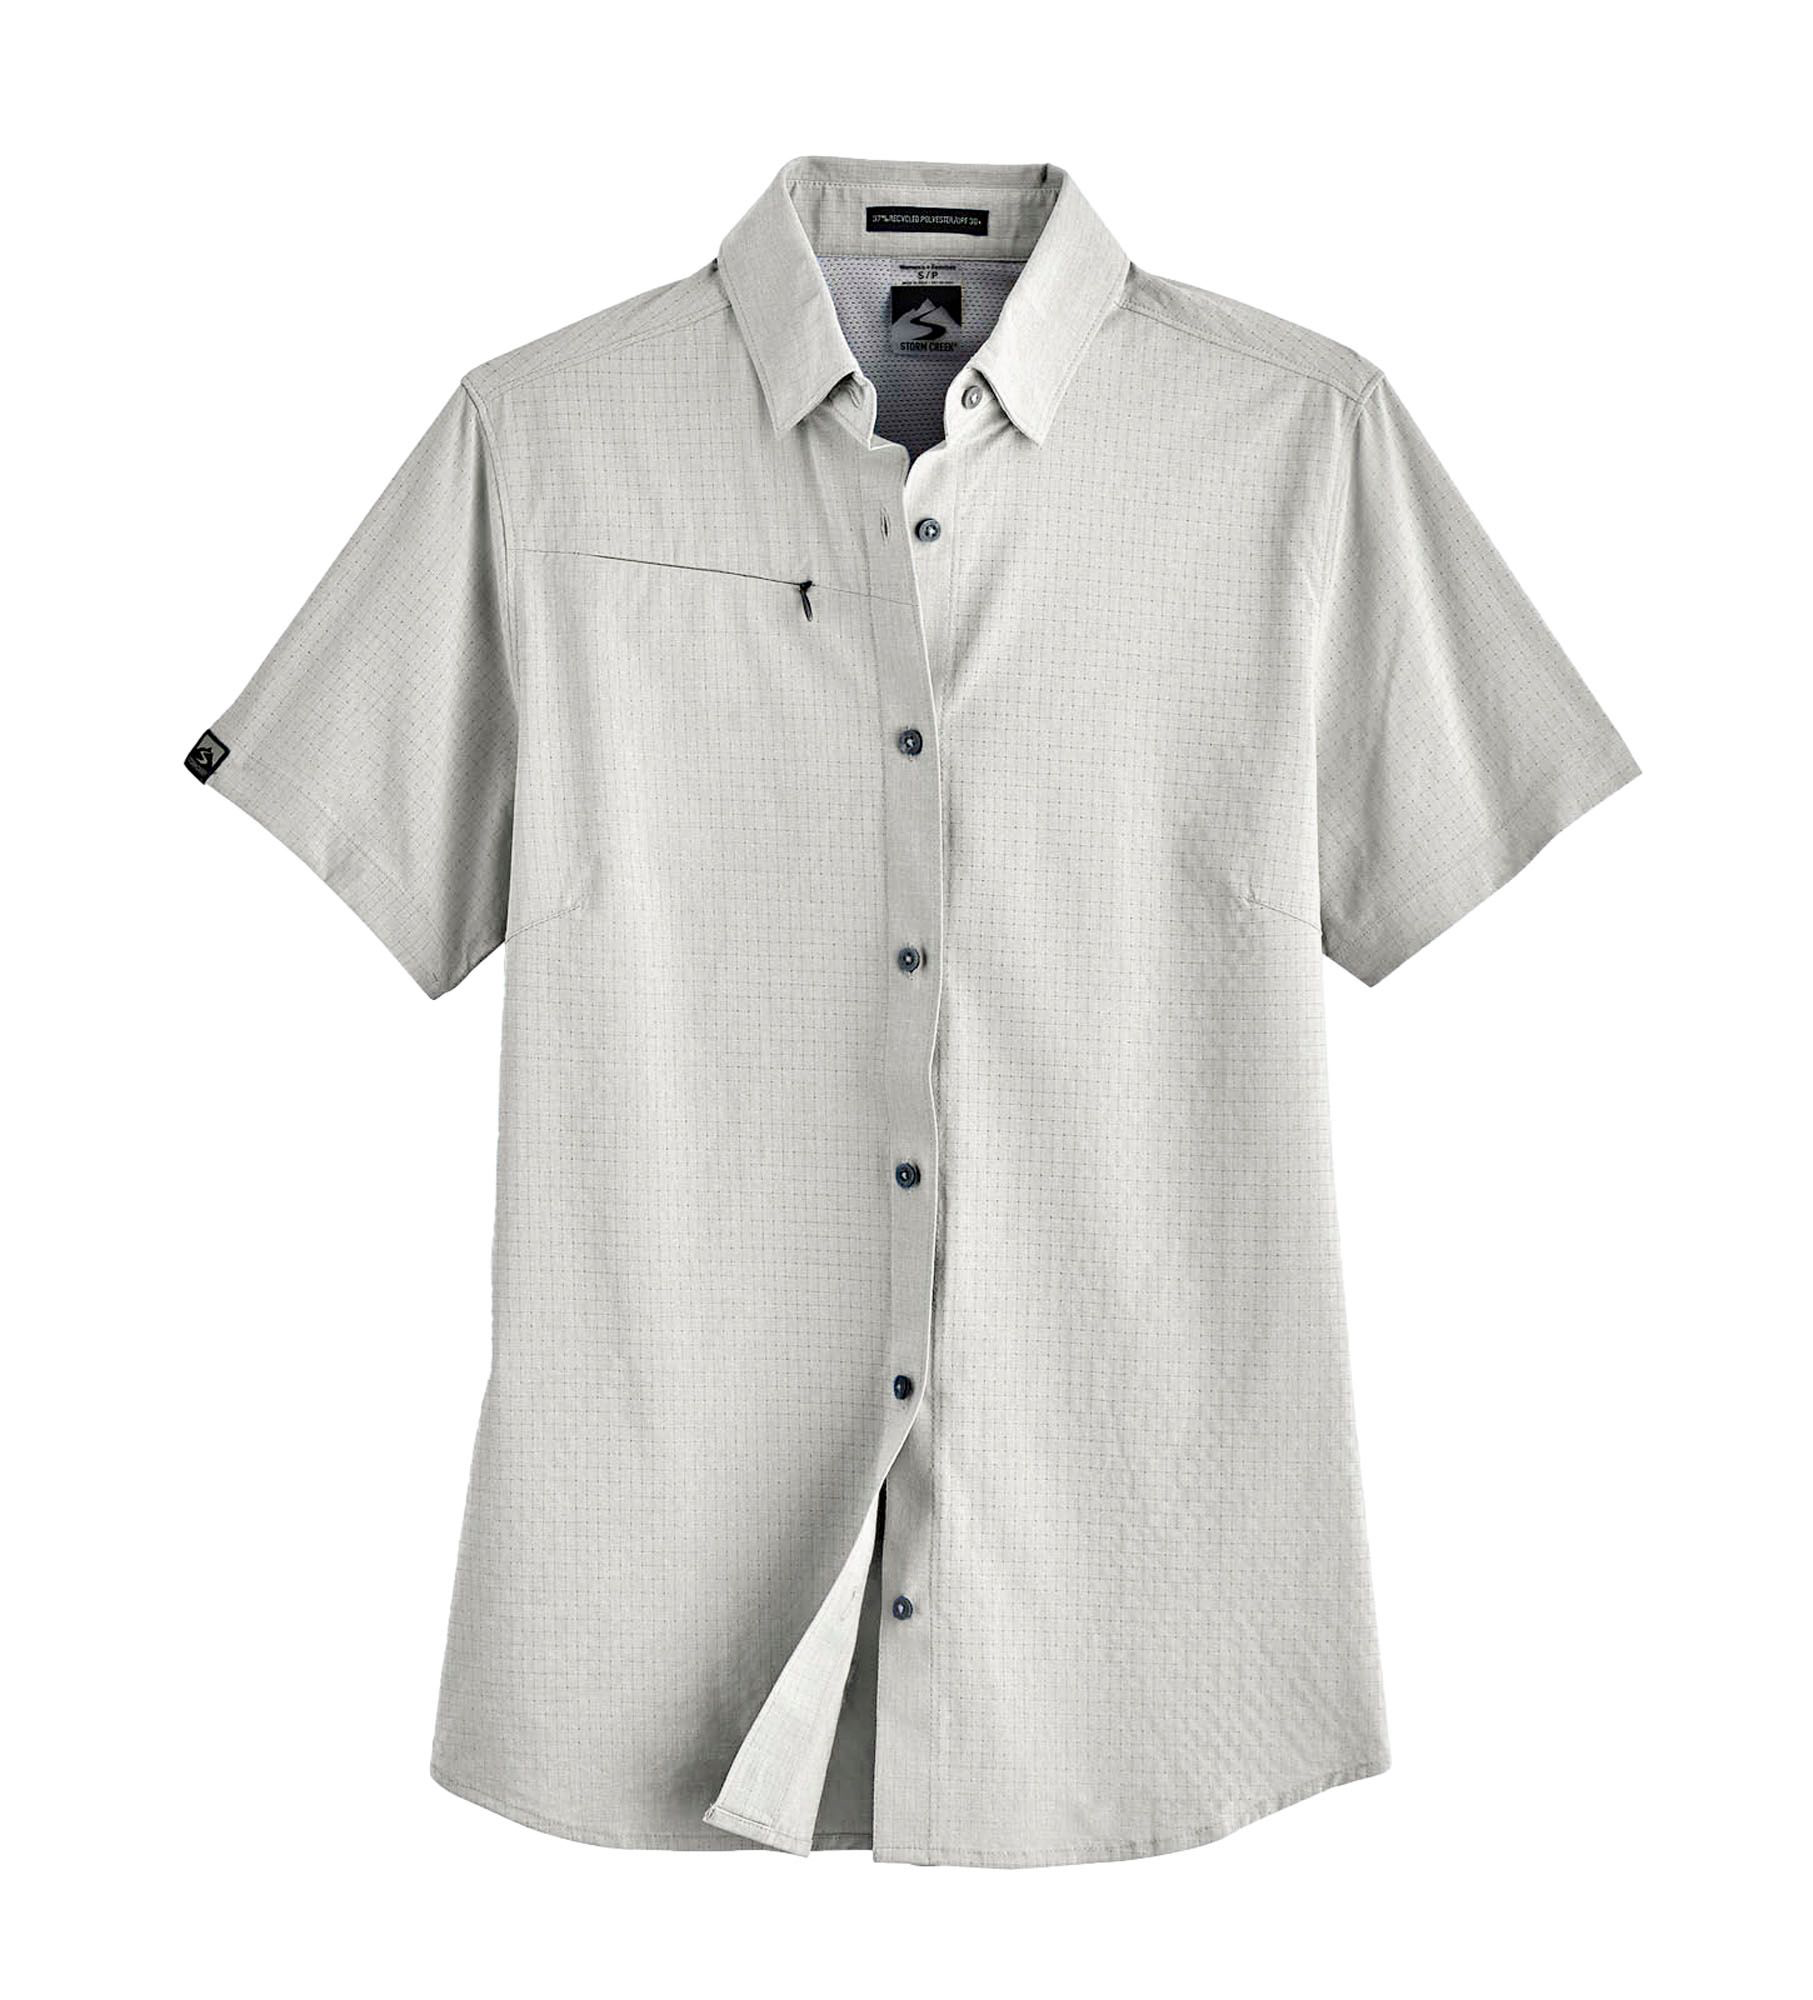 Storm Creek Naturalist Short-Sleeve Shirt for Ladies